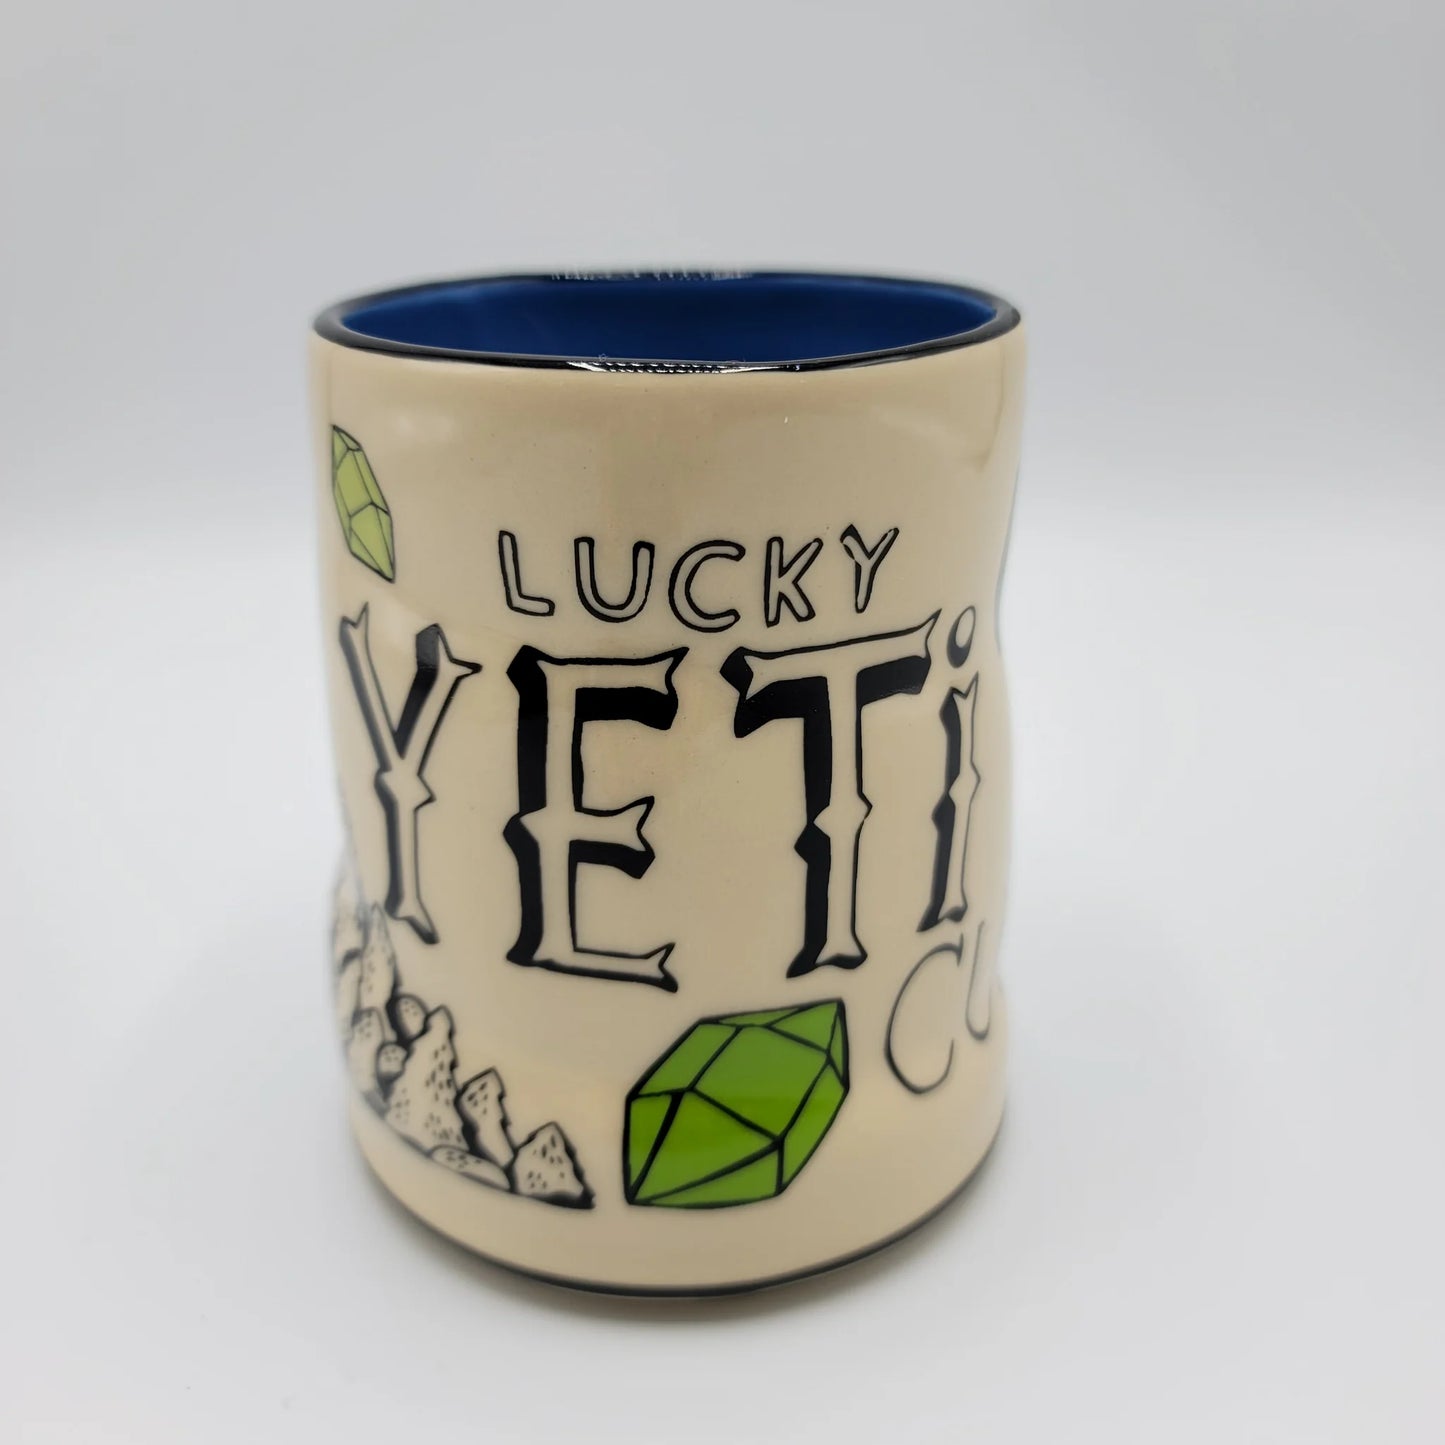 Yeti Lucky Cup - 16oz, XL